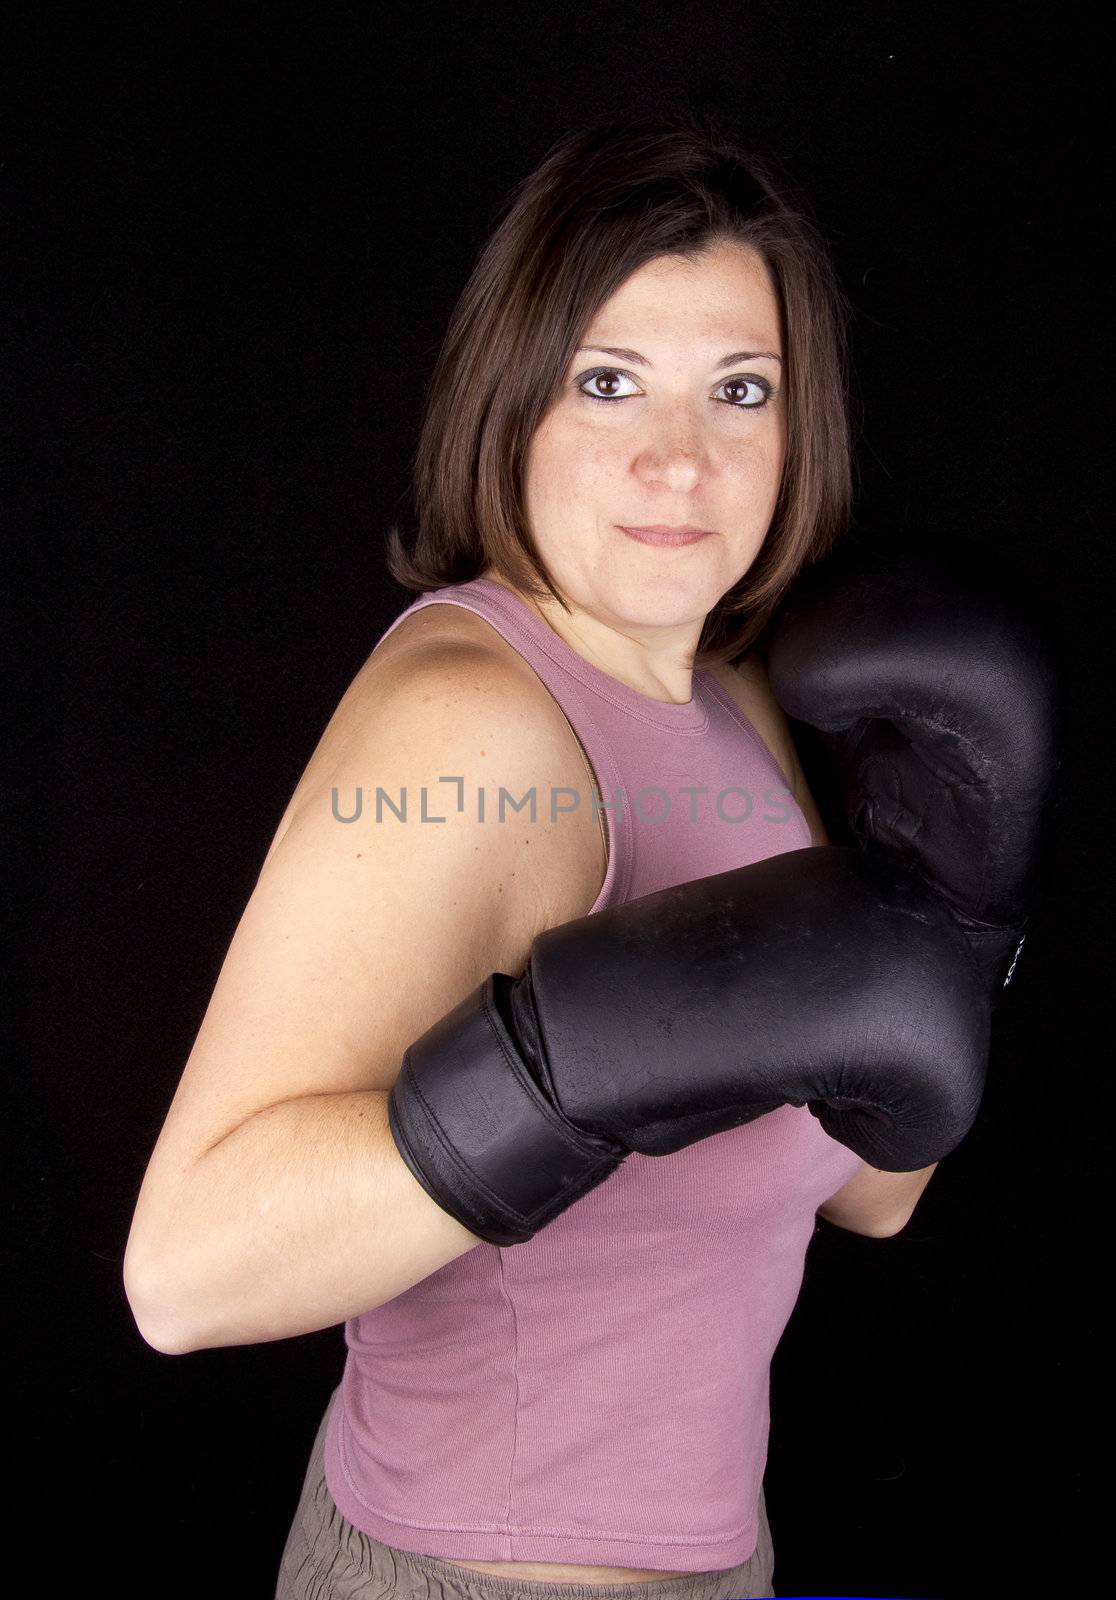 a boxing girl by danilobiancalana